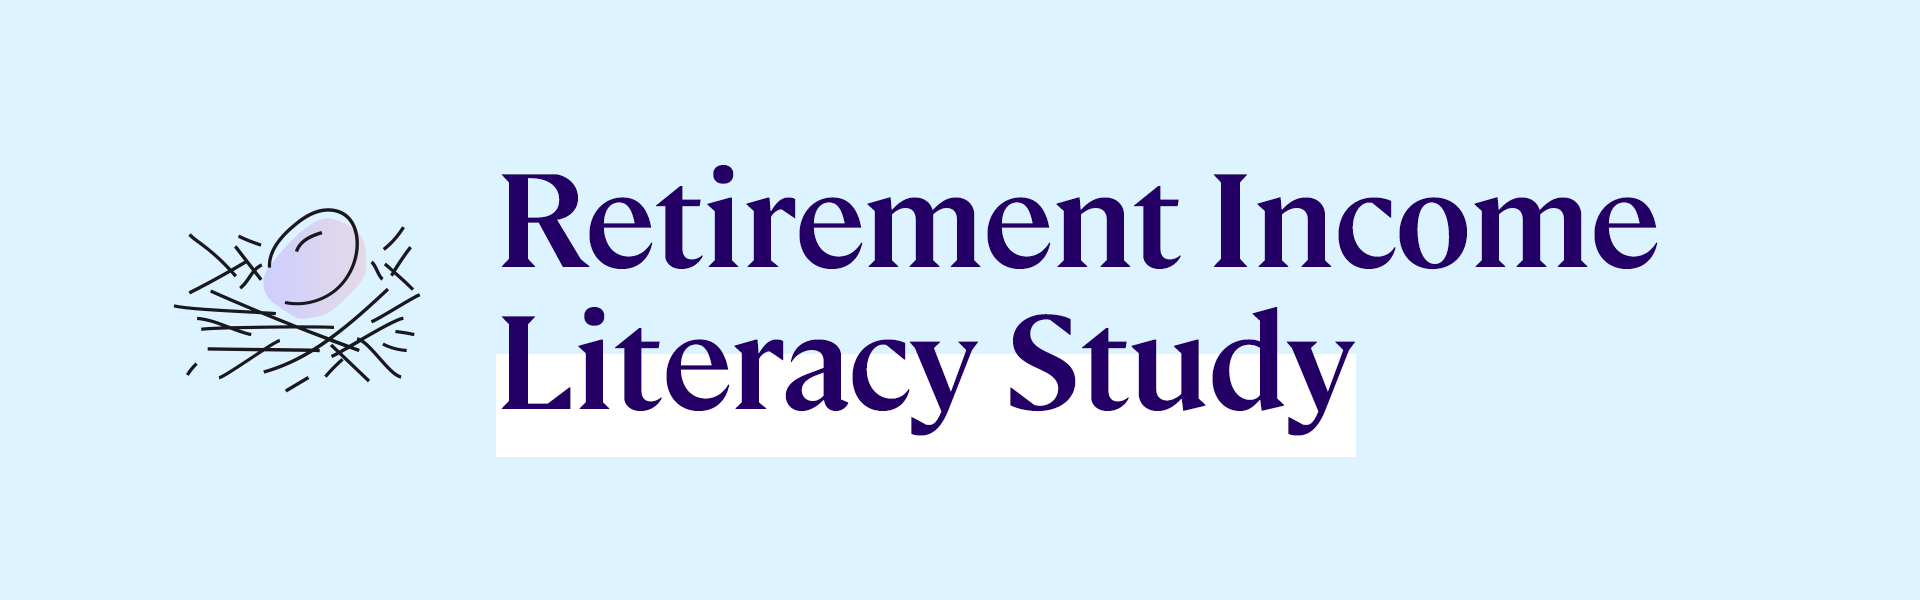 Retirement Income Literacy Study Logo